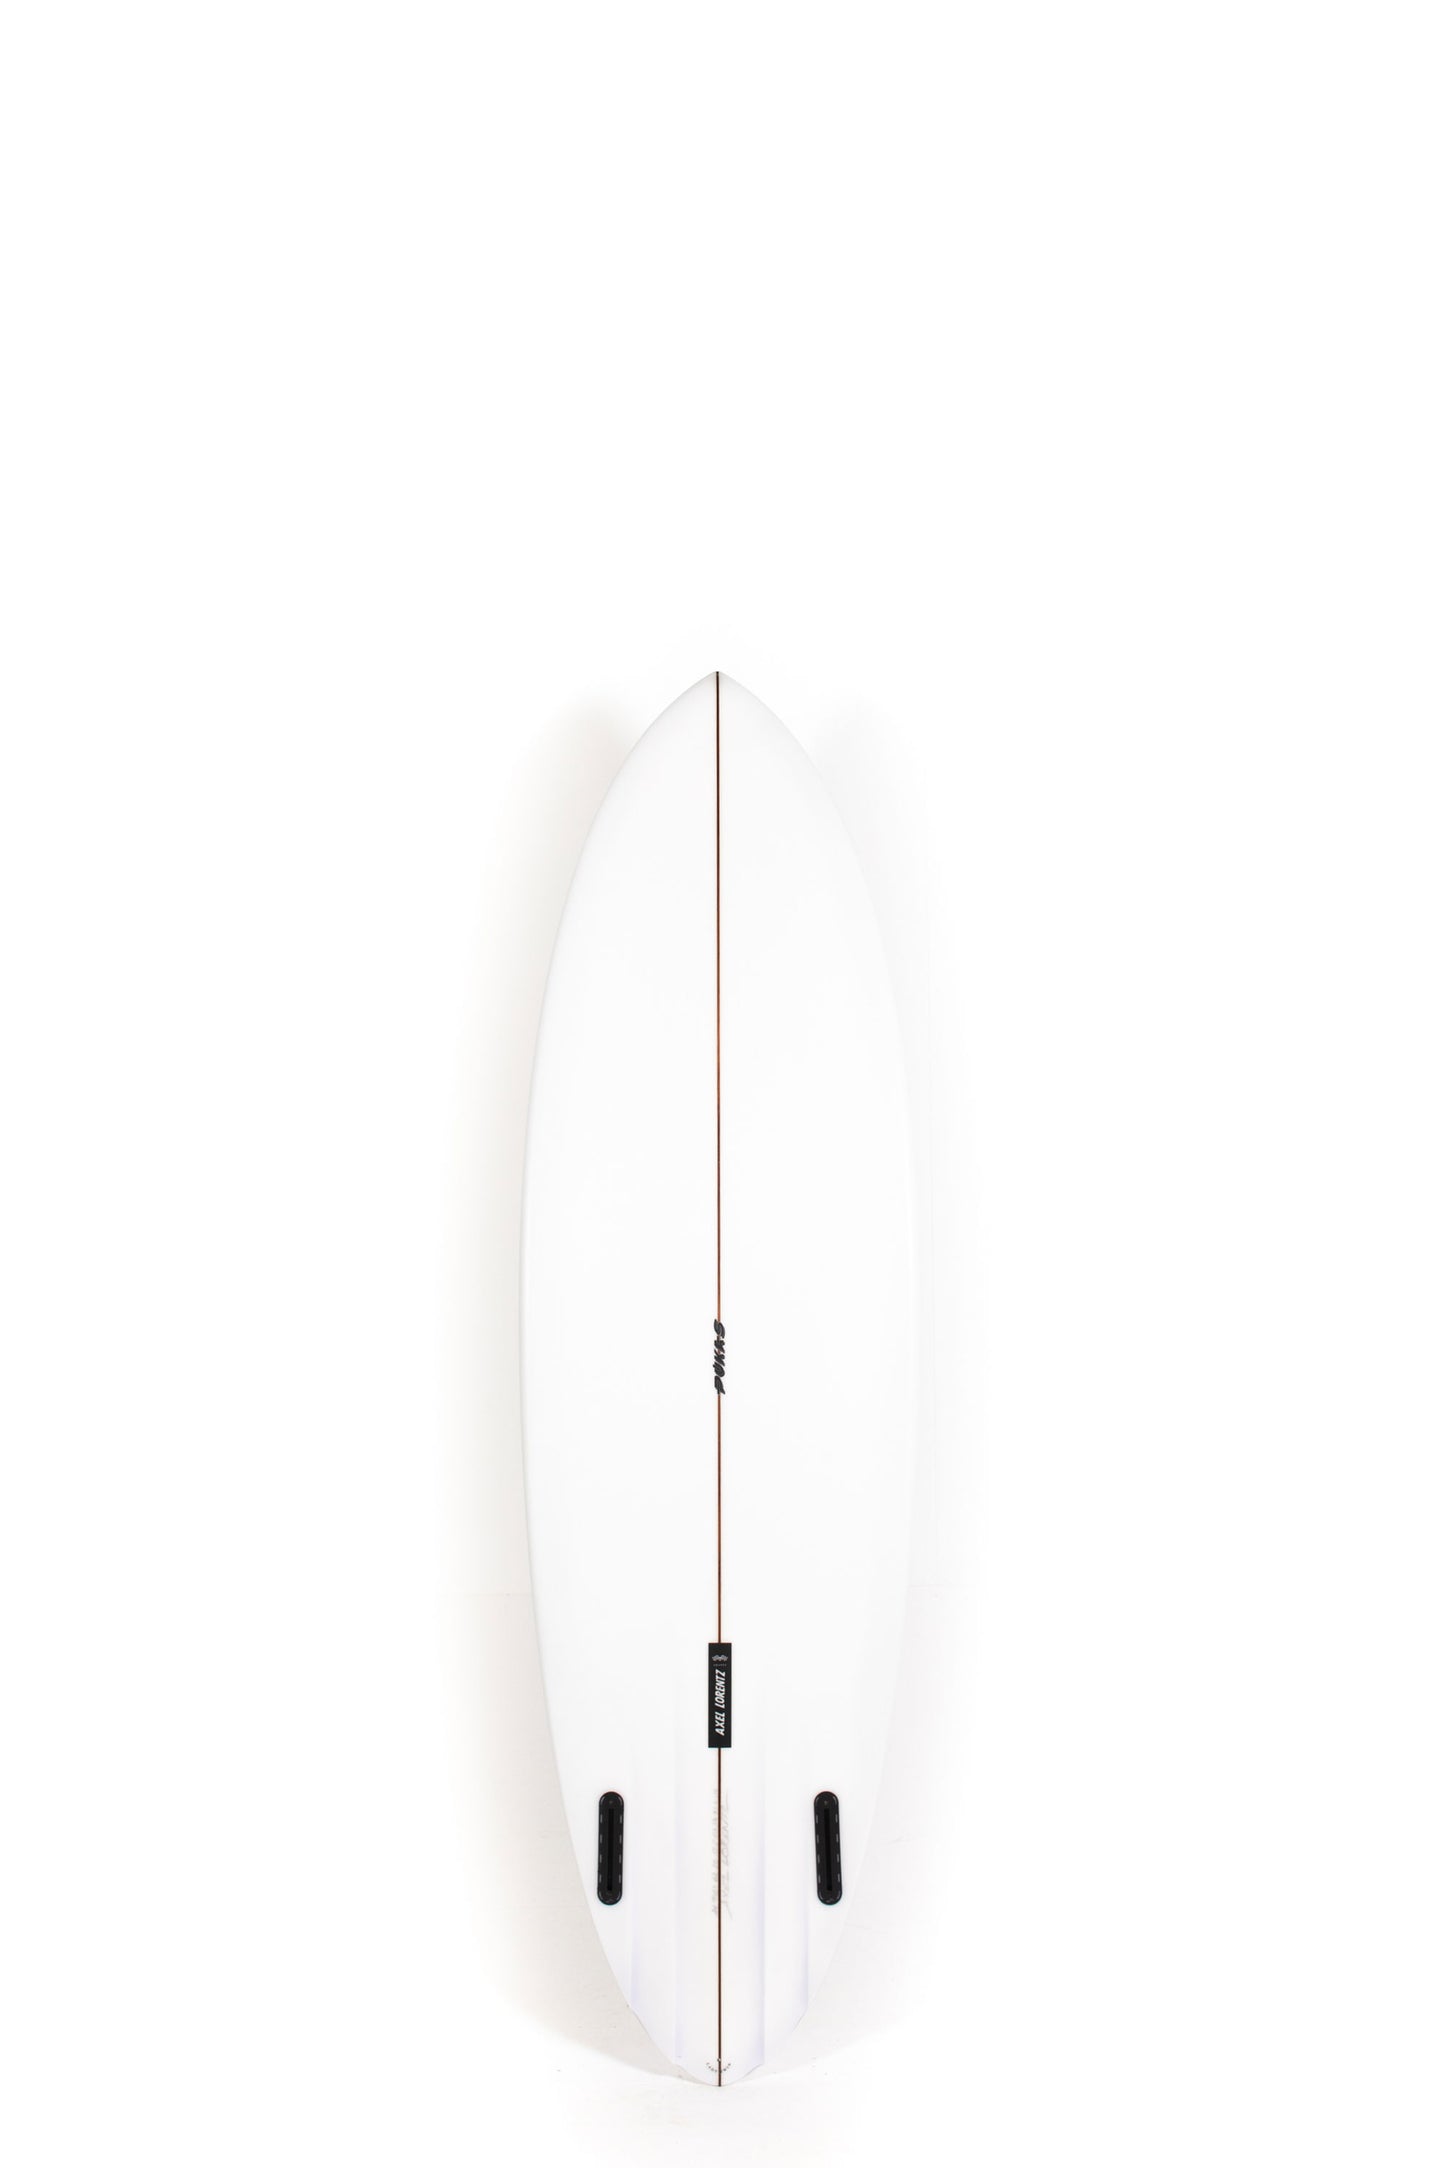 Pukas Surf Shop - Pukas Surfboard - LADY TWIN by Axel Lorentz - 6’2” x 20,5 x 2,63 - 34,9L - AX09451